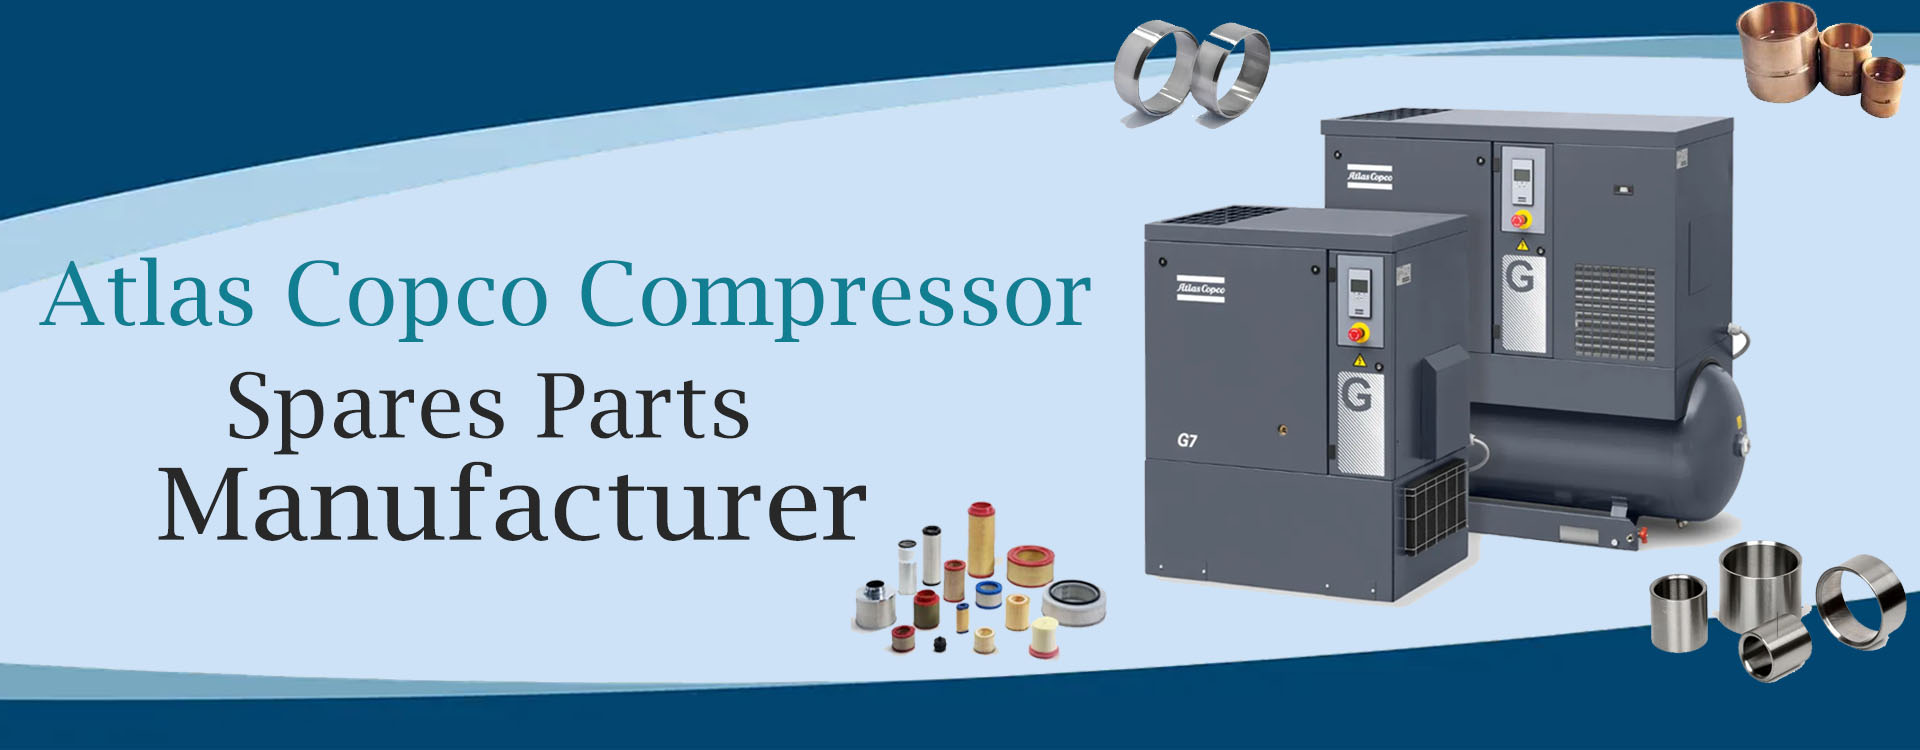 Atlas Copco Compressor Part Manufacturer